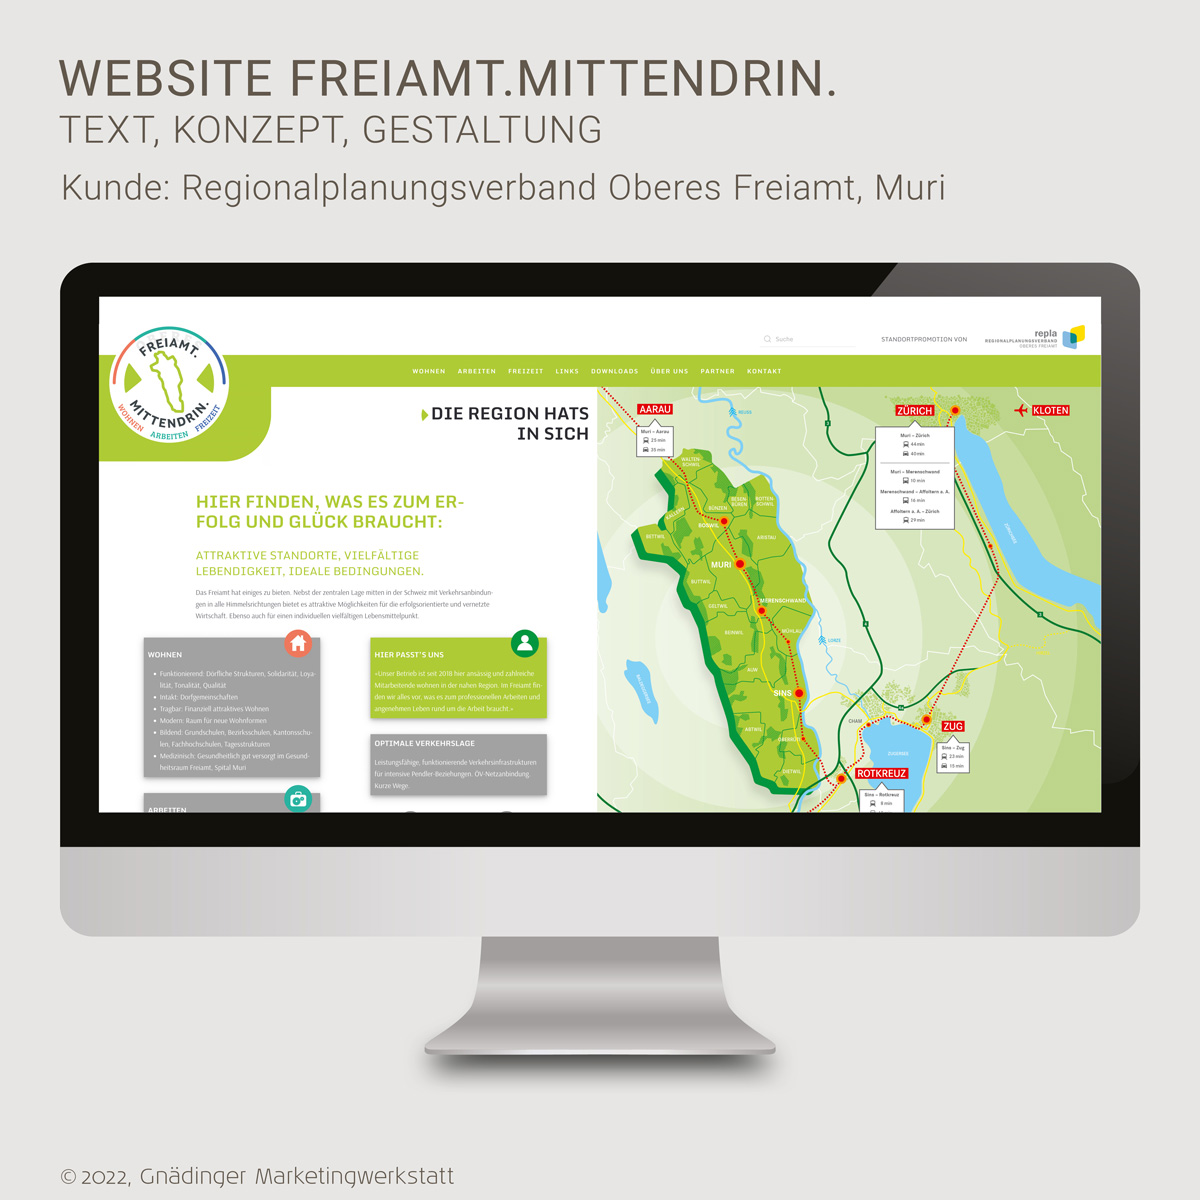 WEB2_GMW_Projekt_Repla_Website-Freiamt-Mittendrin_1200x1200px